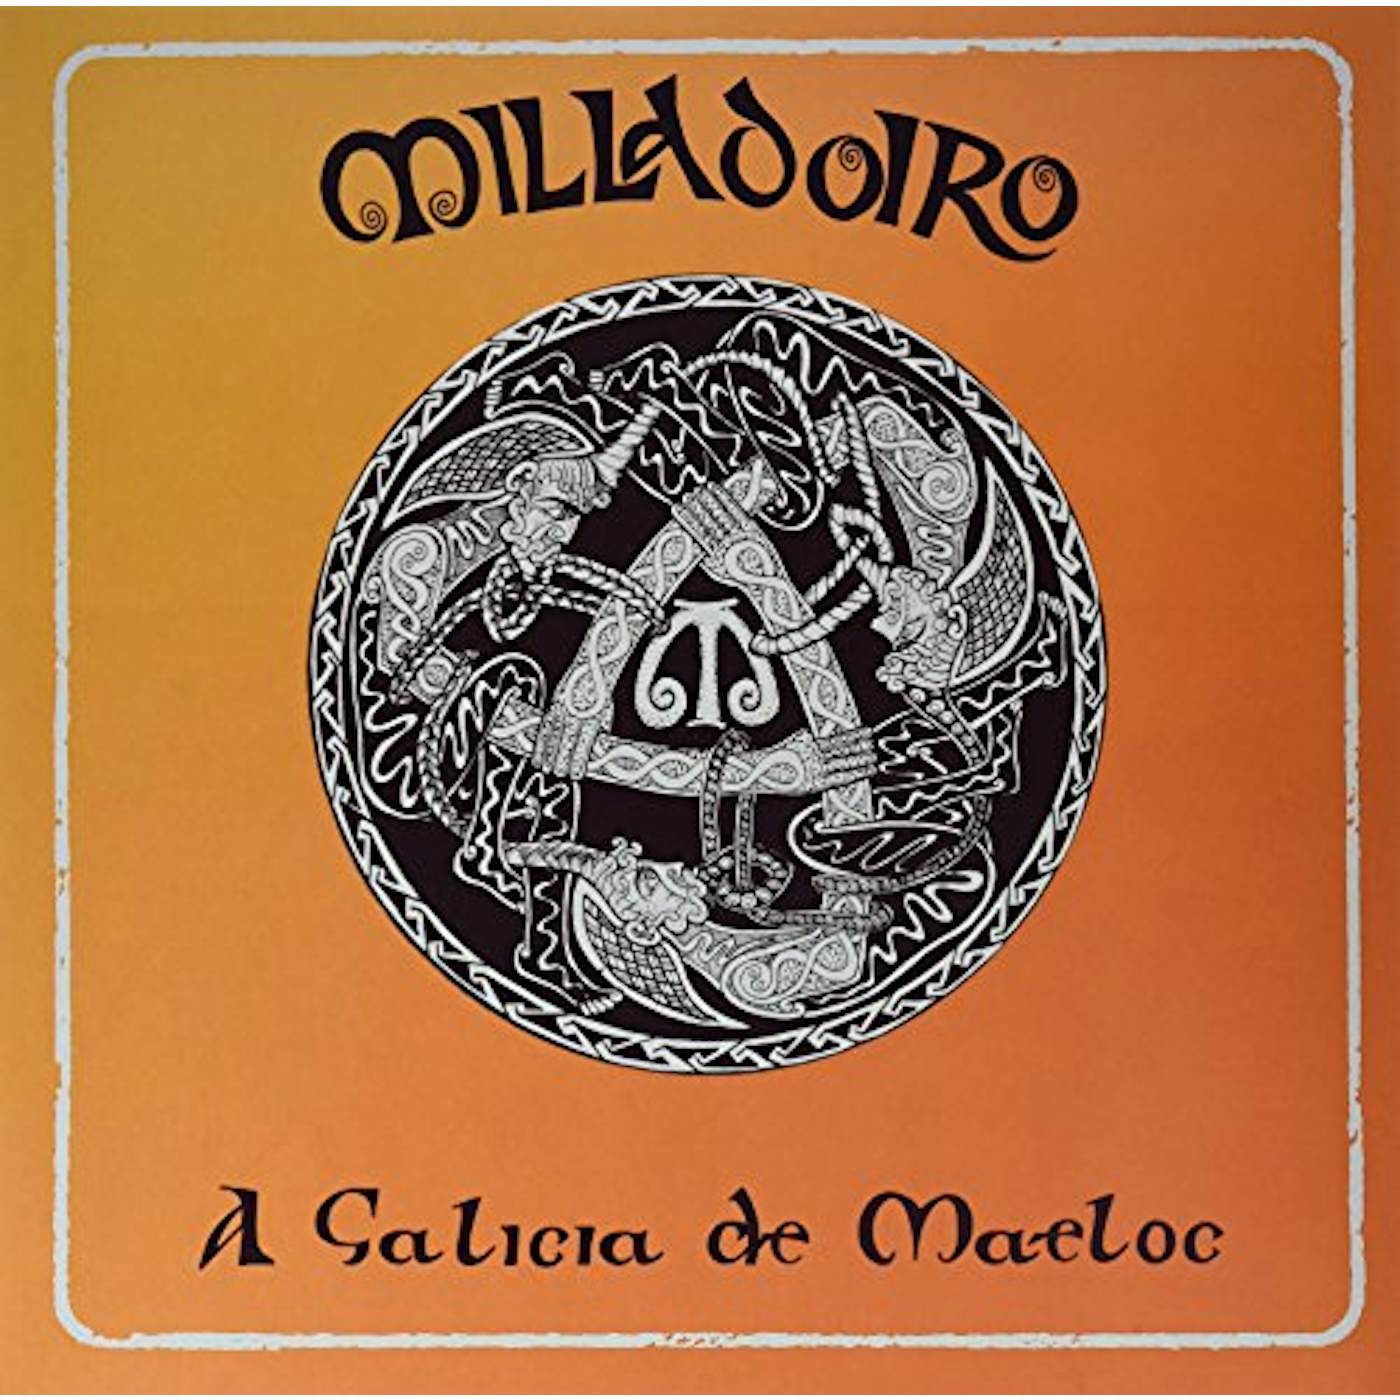 Milladoiro A Galicia de Maeloc Vinyl Record